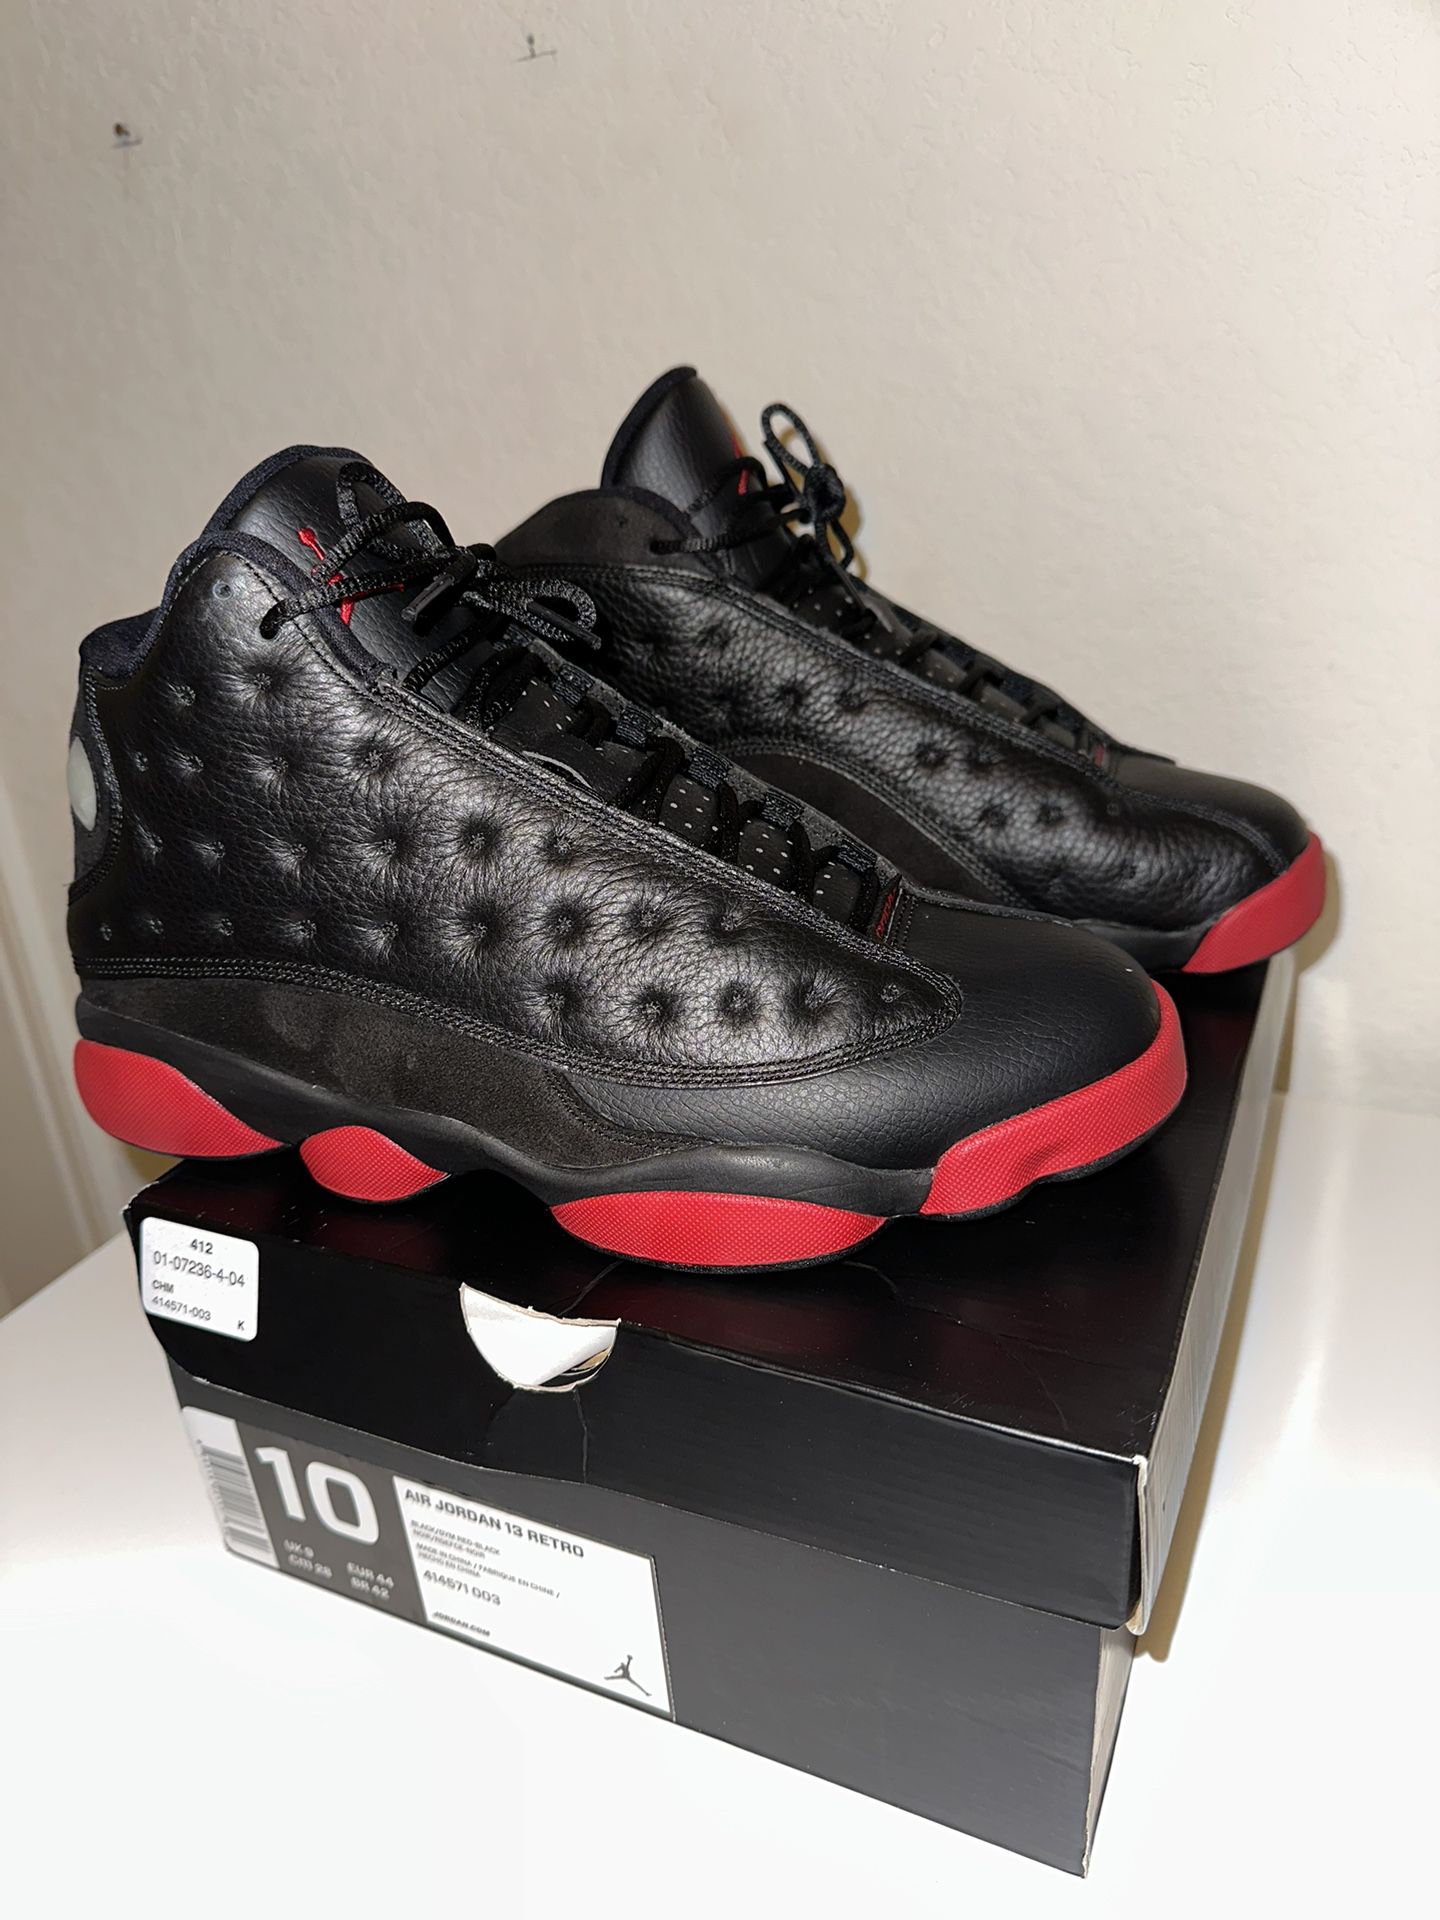 Air Jordan 13 Retro Dirty Bred Men's Shoe - Black/Gym Red/Black - 10